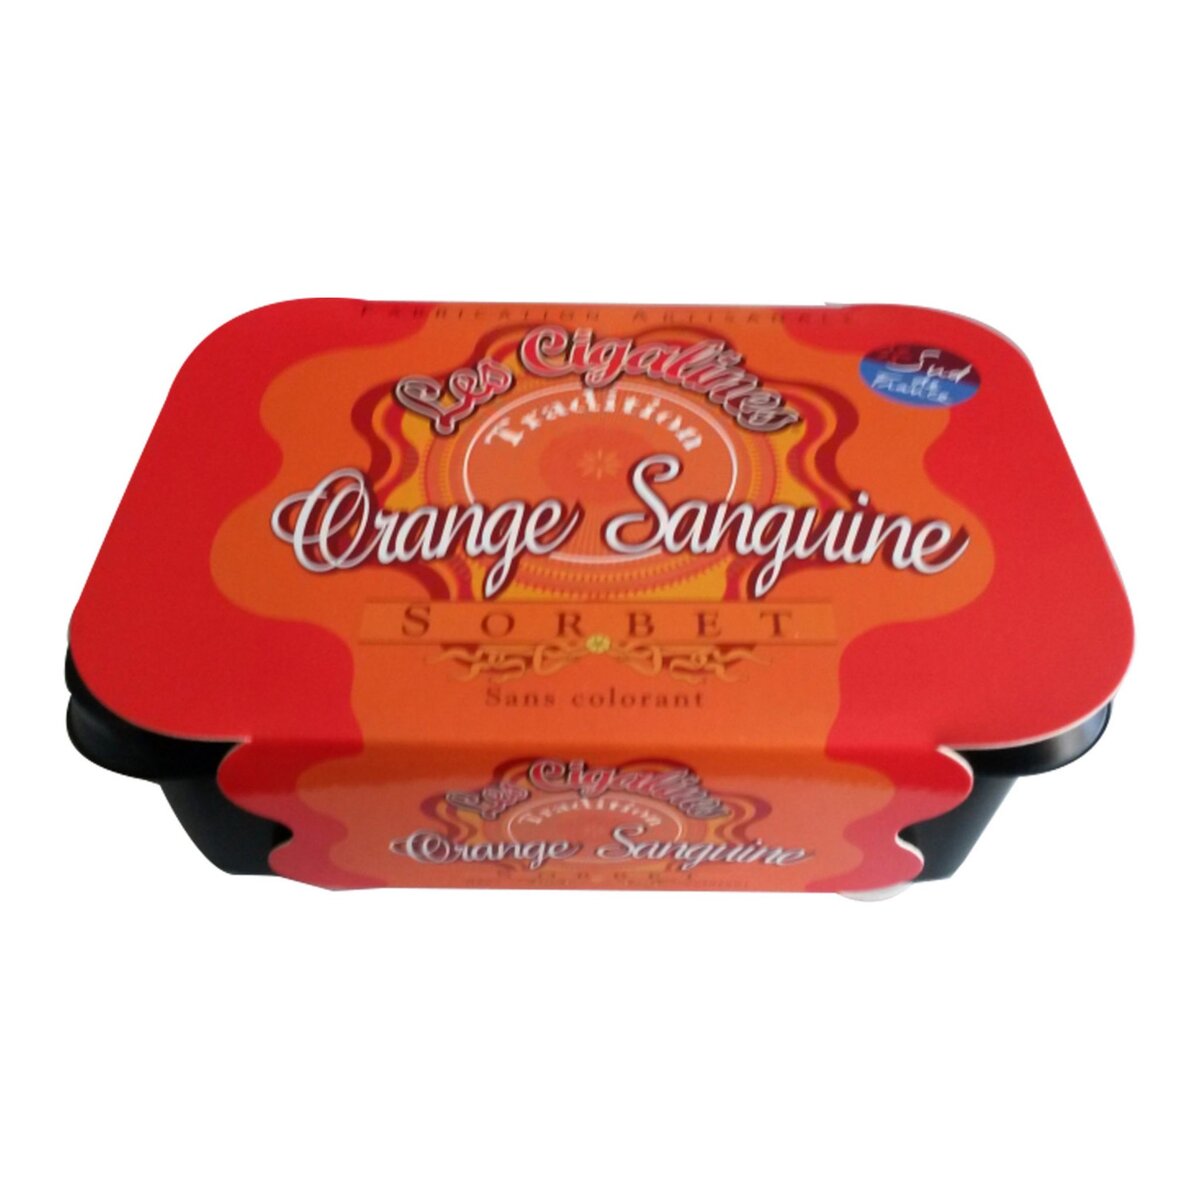 LES CIGALINES Sorbet orange sanguine 580g